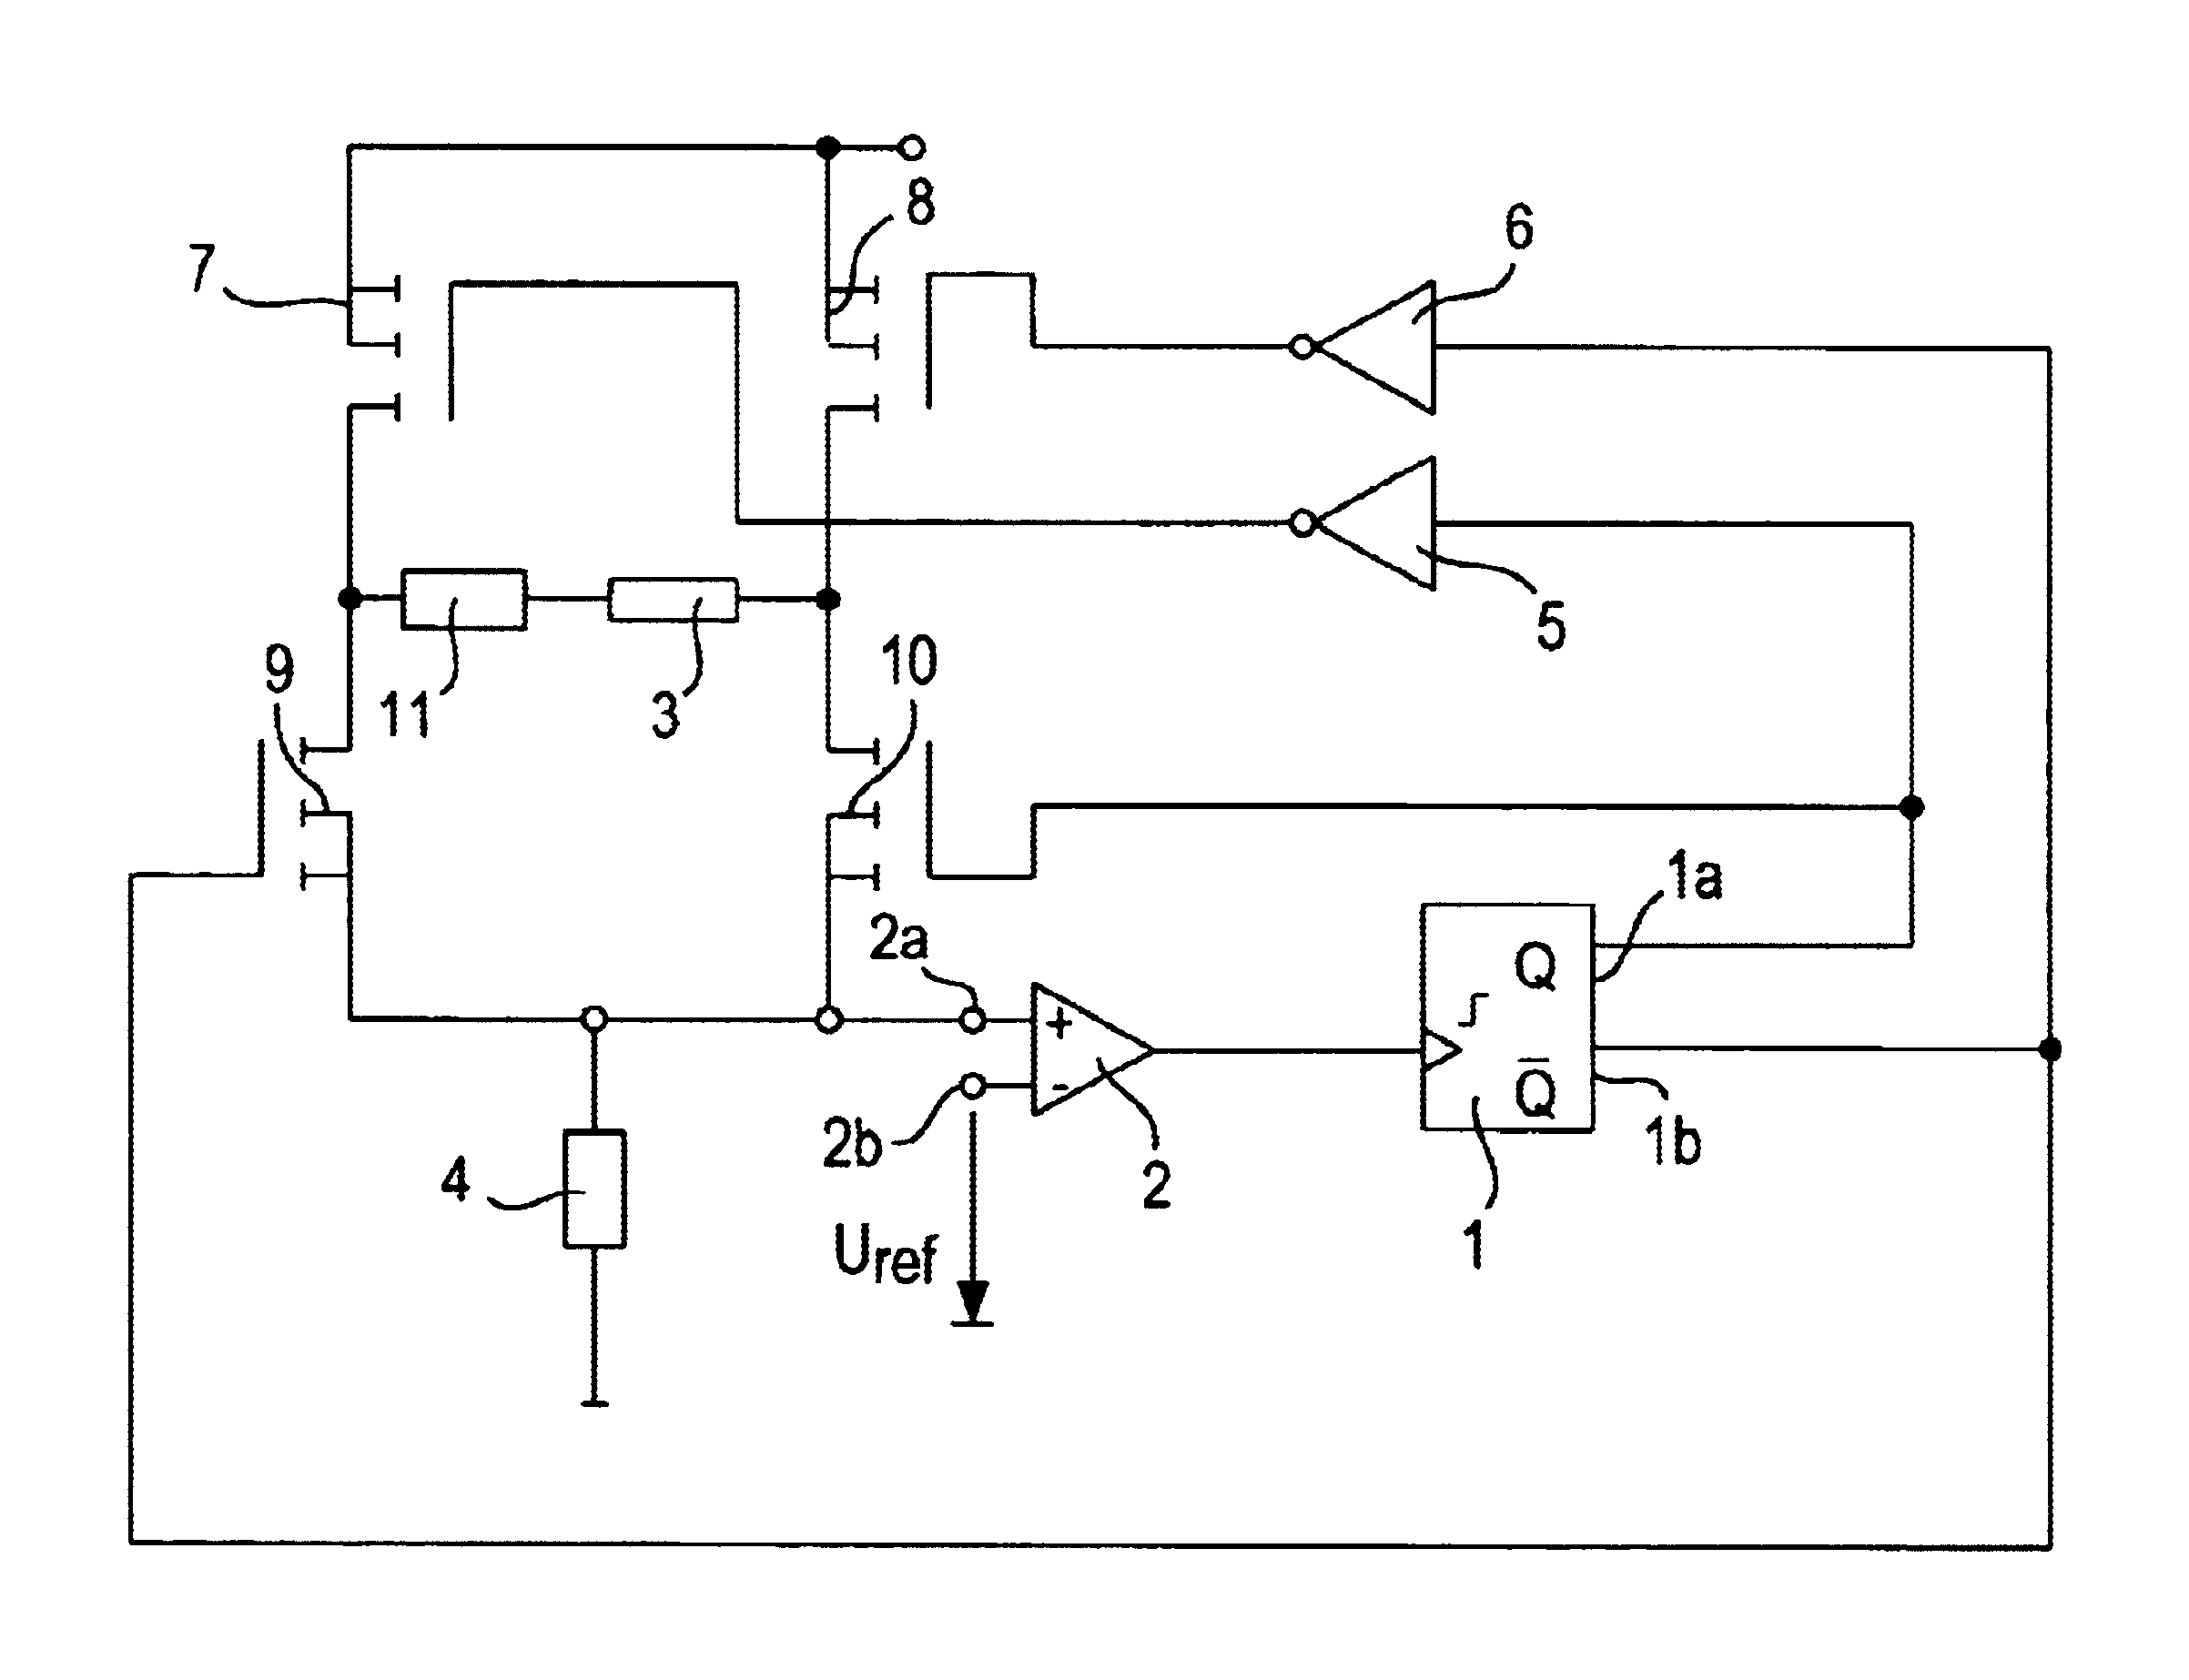 Circuit arrangement for generating square pulses and improved compensation current sensor using same